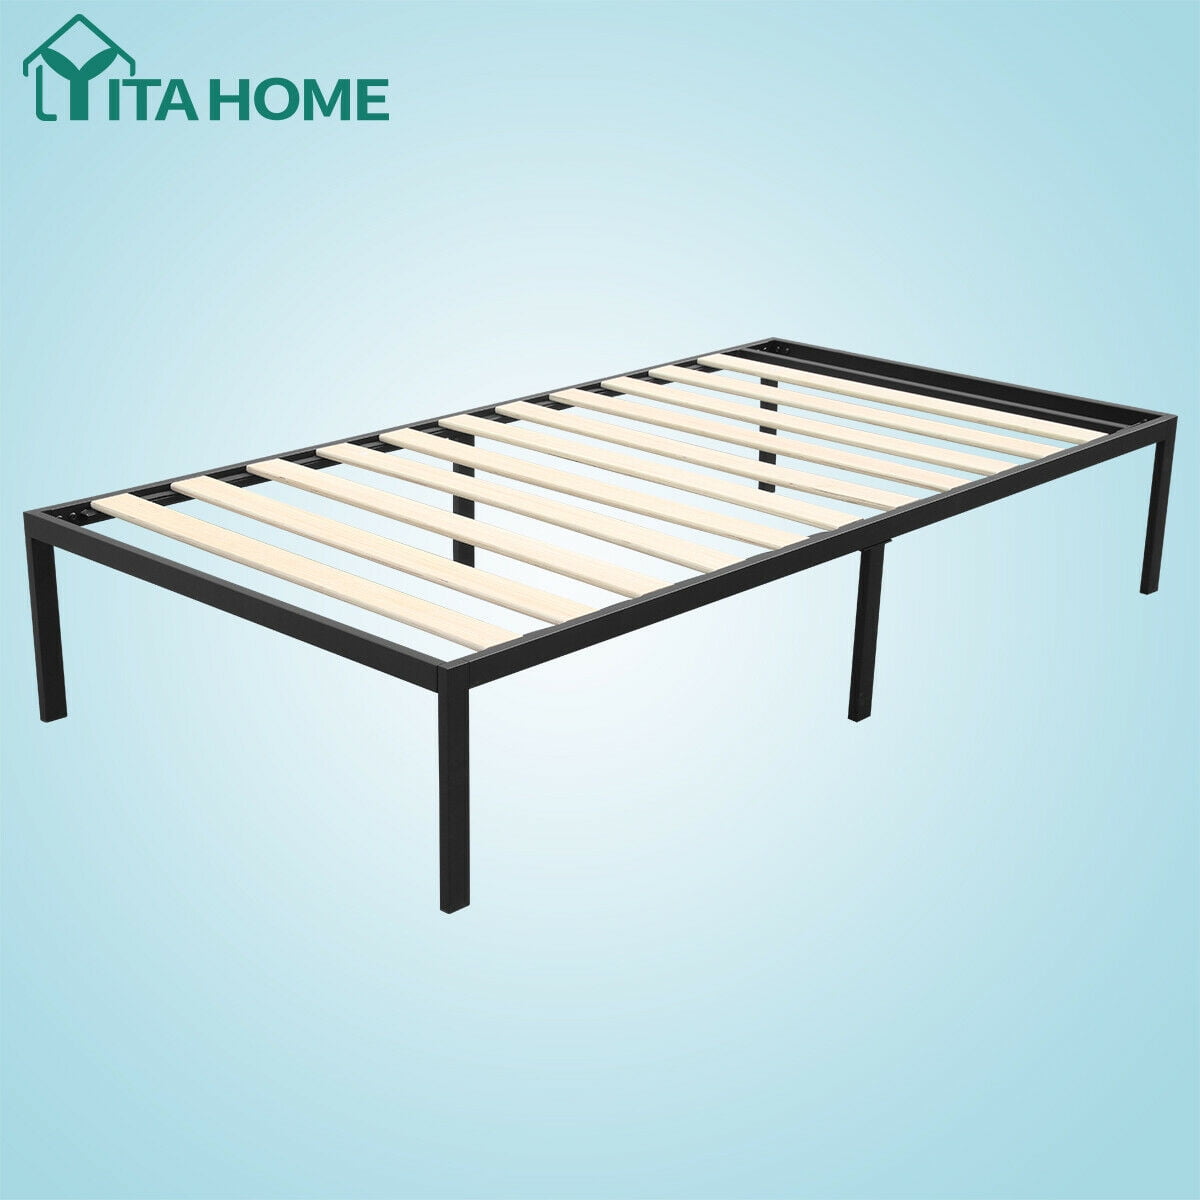 YITAHOME Full Size Platform Bed Frame Mattress Steel Foundation Metal Heavy Duty 